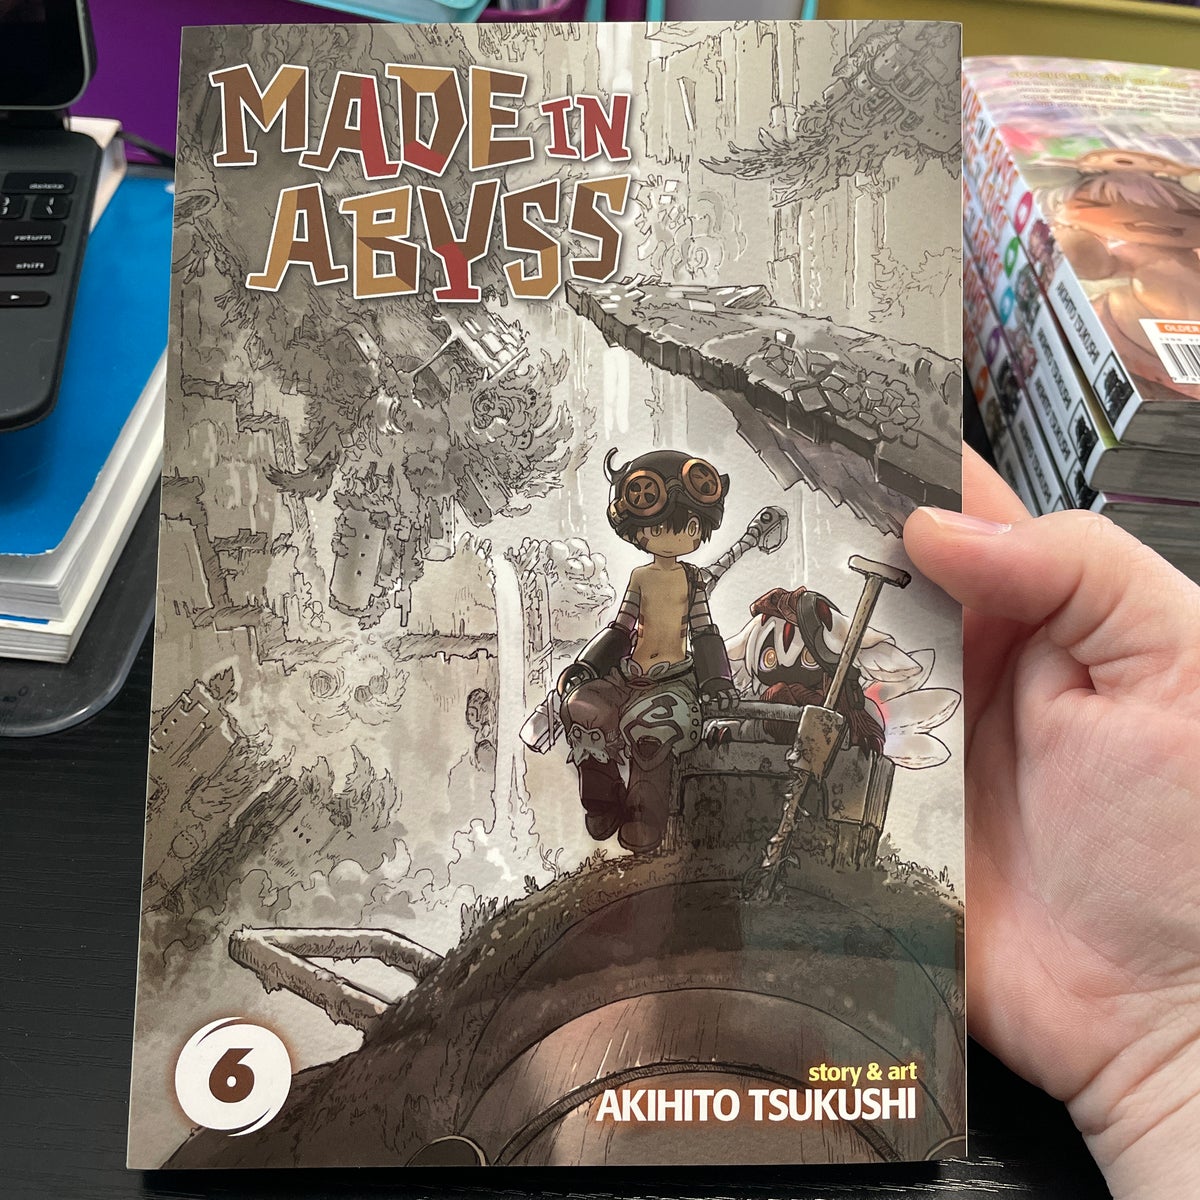 Made in Abyss Vol. 9 by Akihito Tsukushi